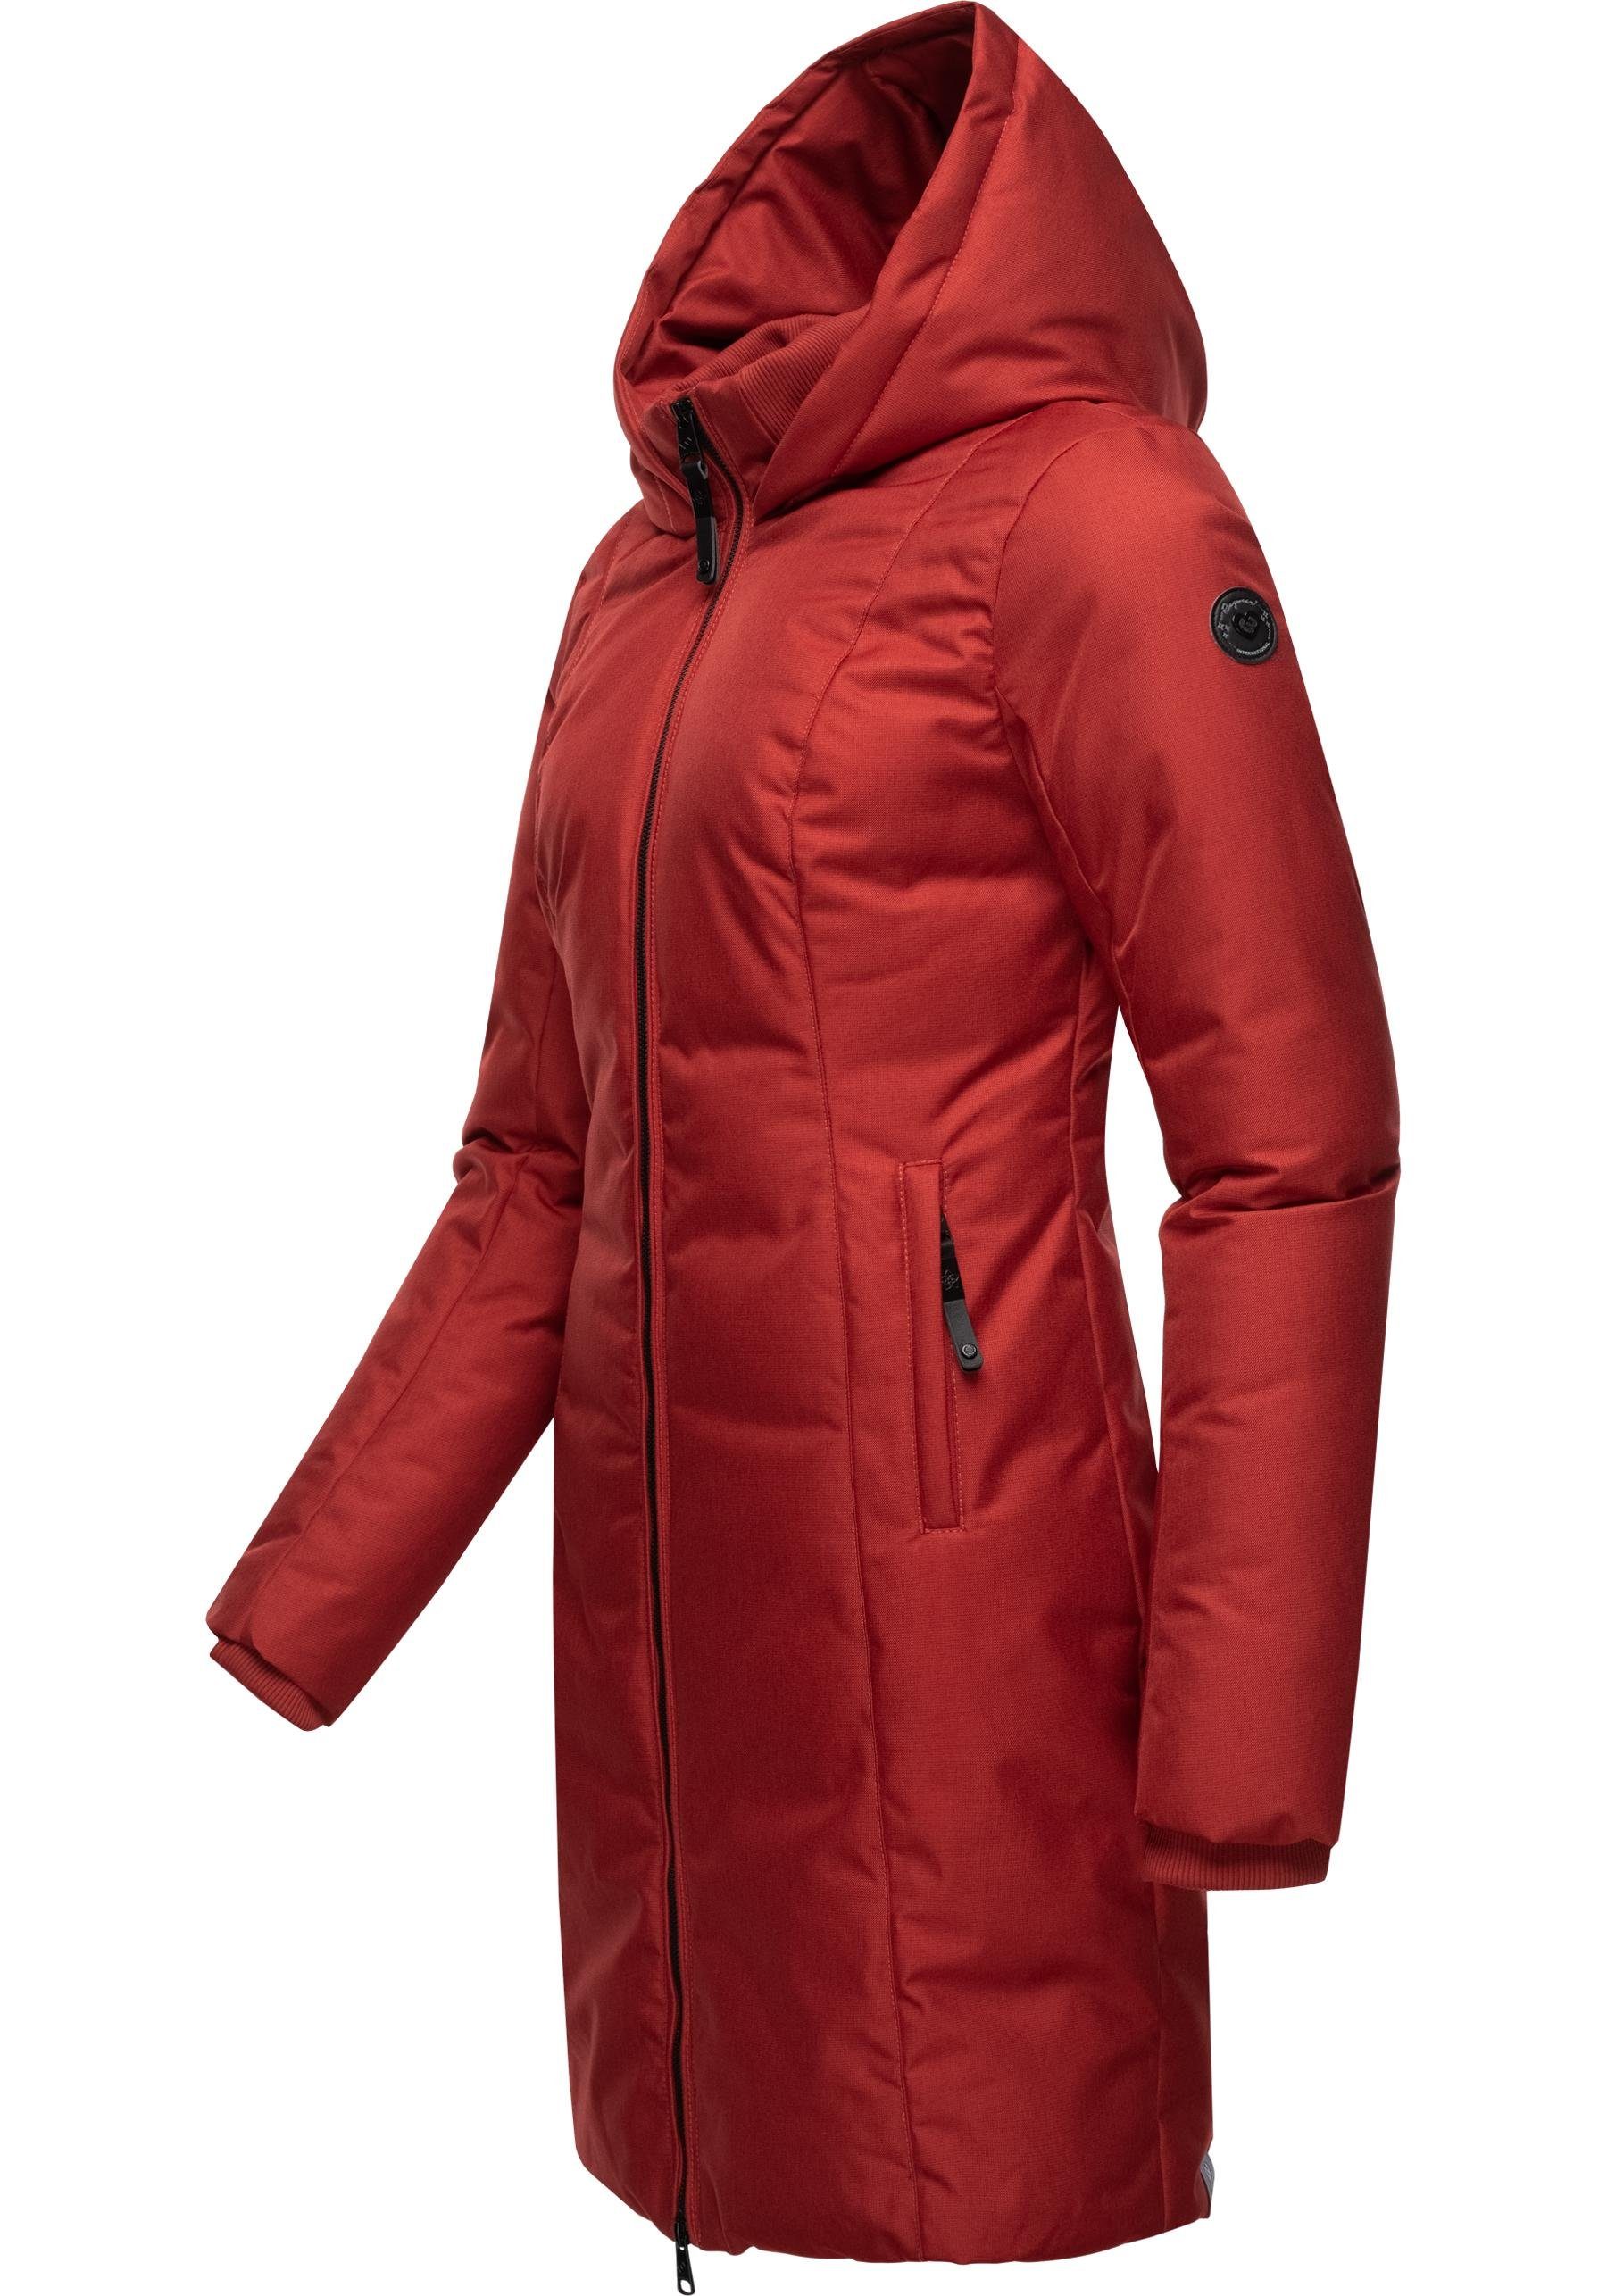 Winterparka stylischer mit Kapuze Wintermantel großer rot Ragwear Amarri